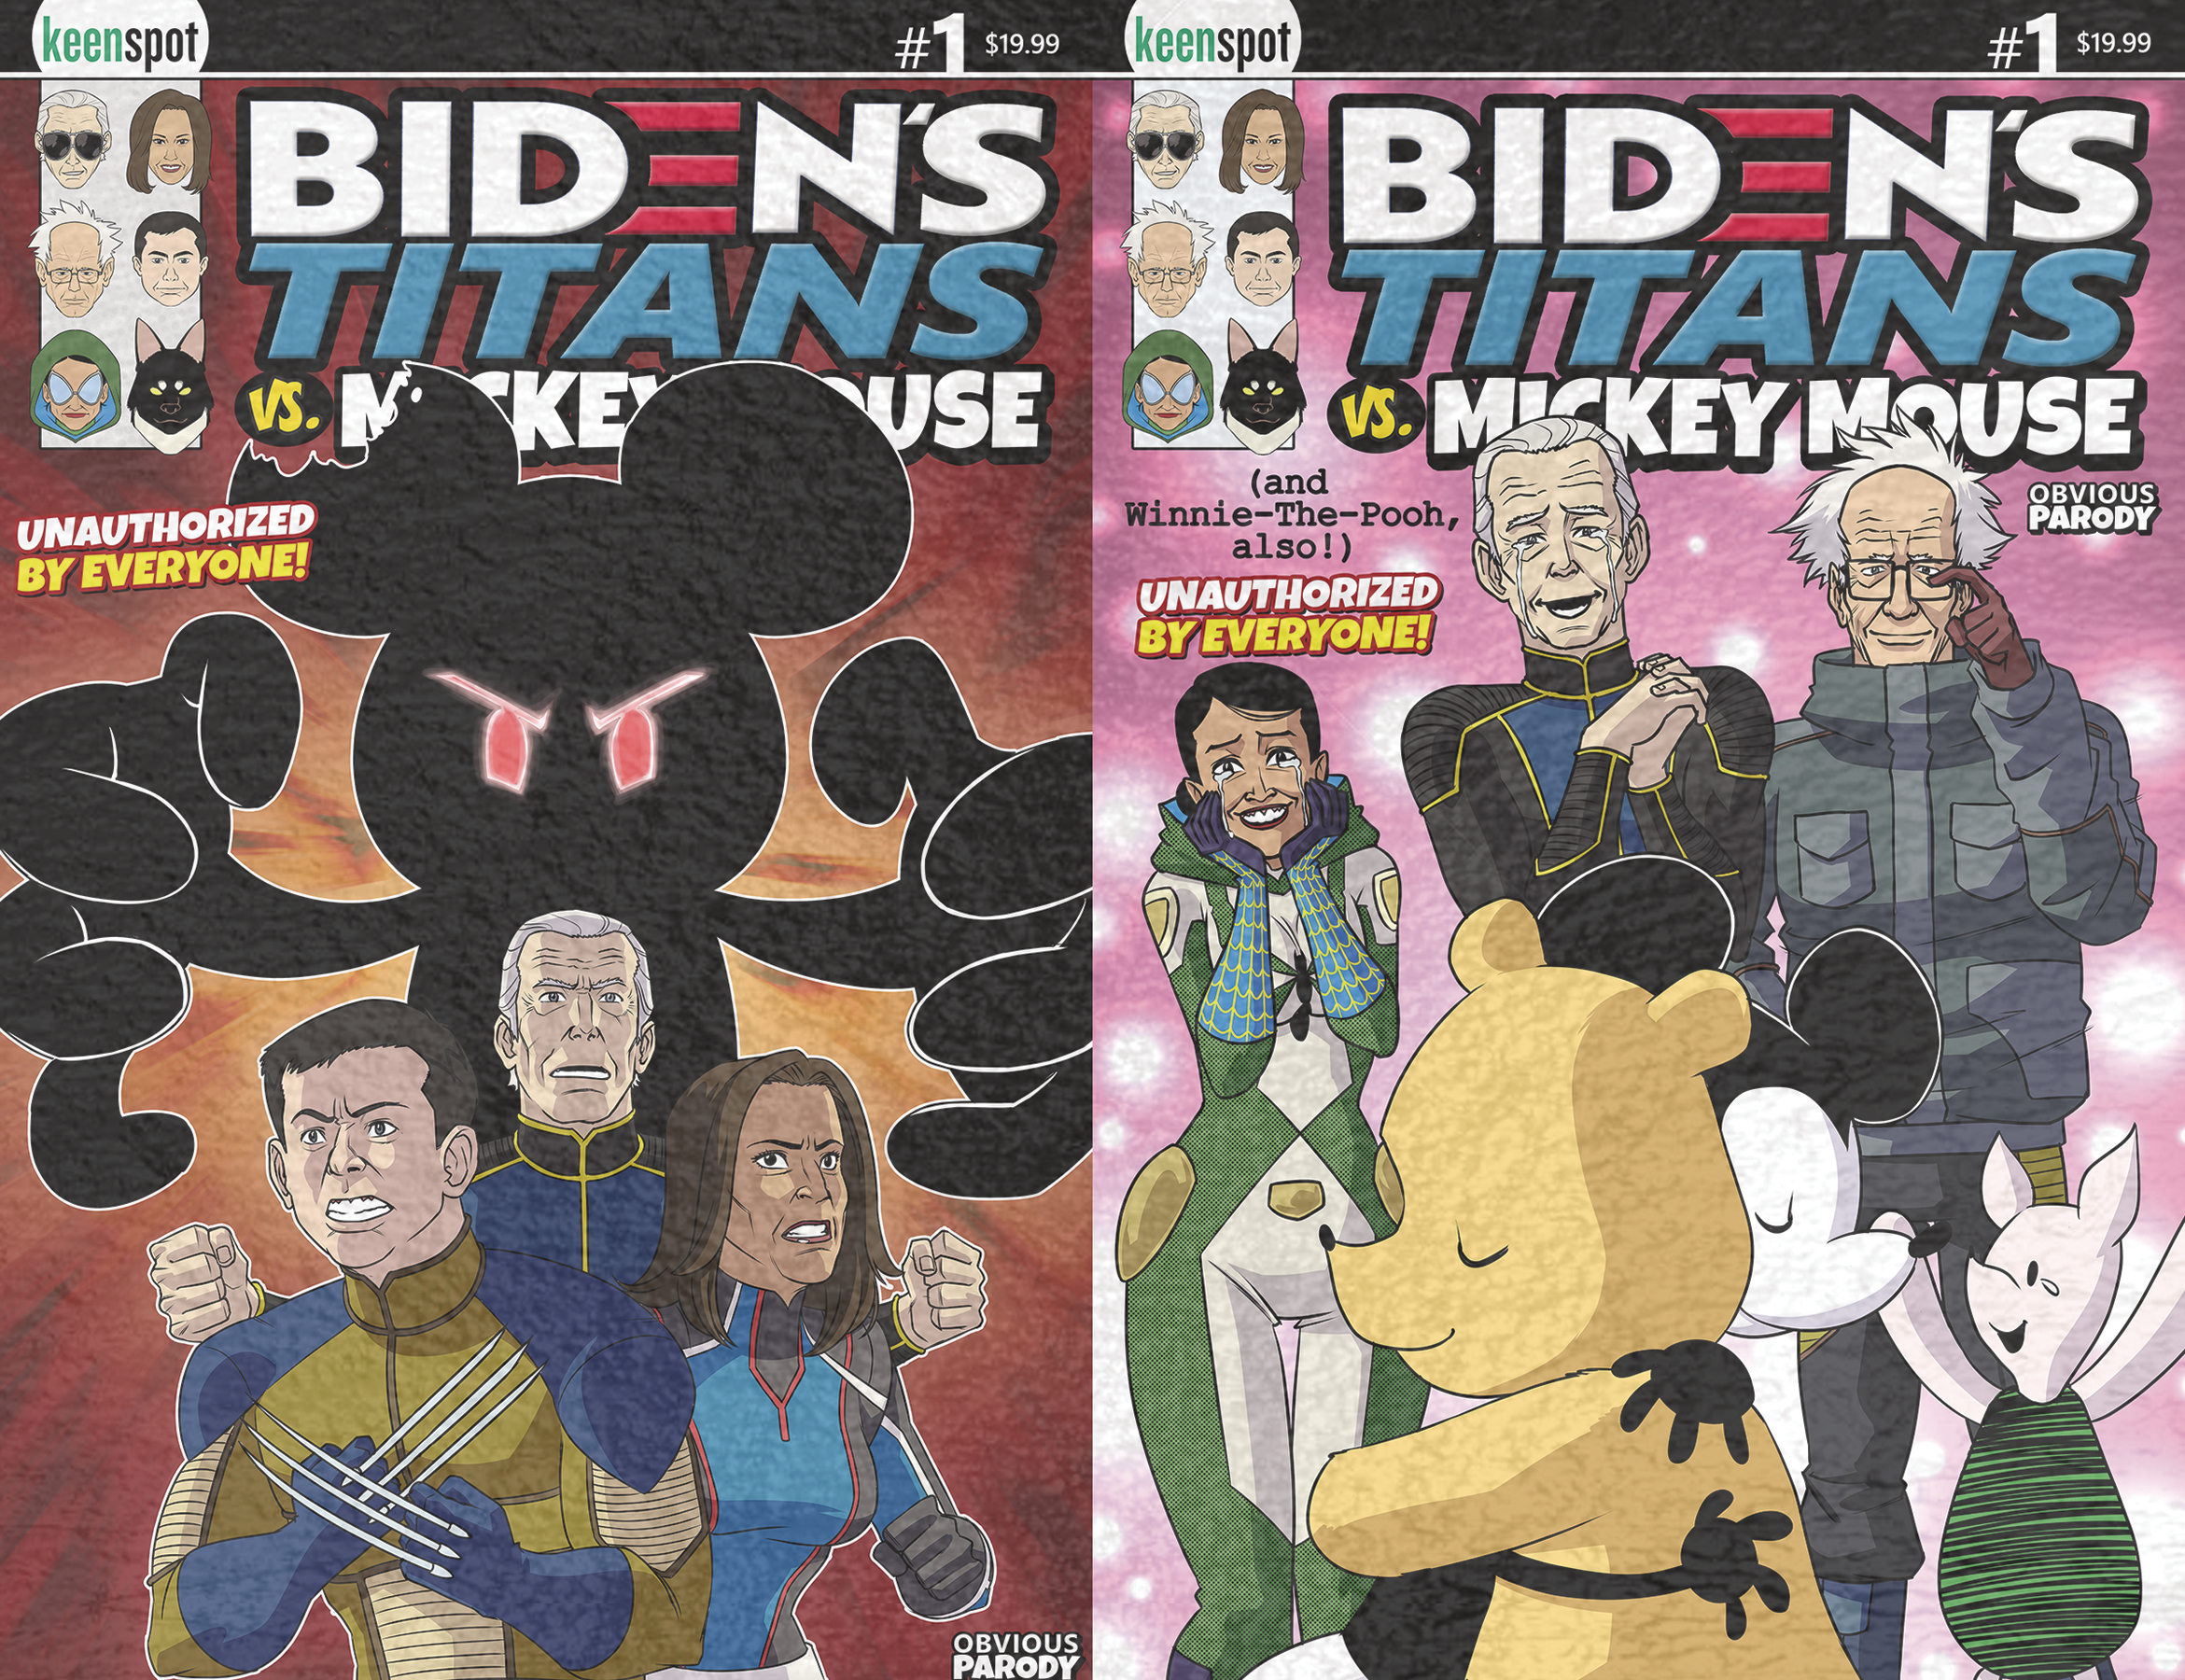 Bidens Titans Vs Mickey Mouse (Unauthorized) #1 Cover F Holofoil Flip Cover